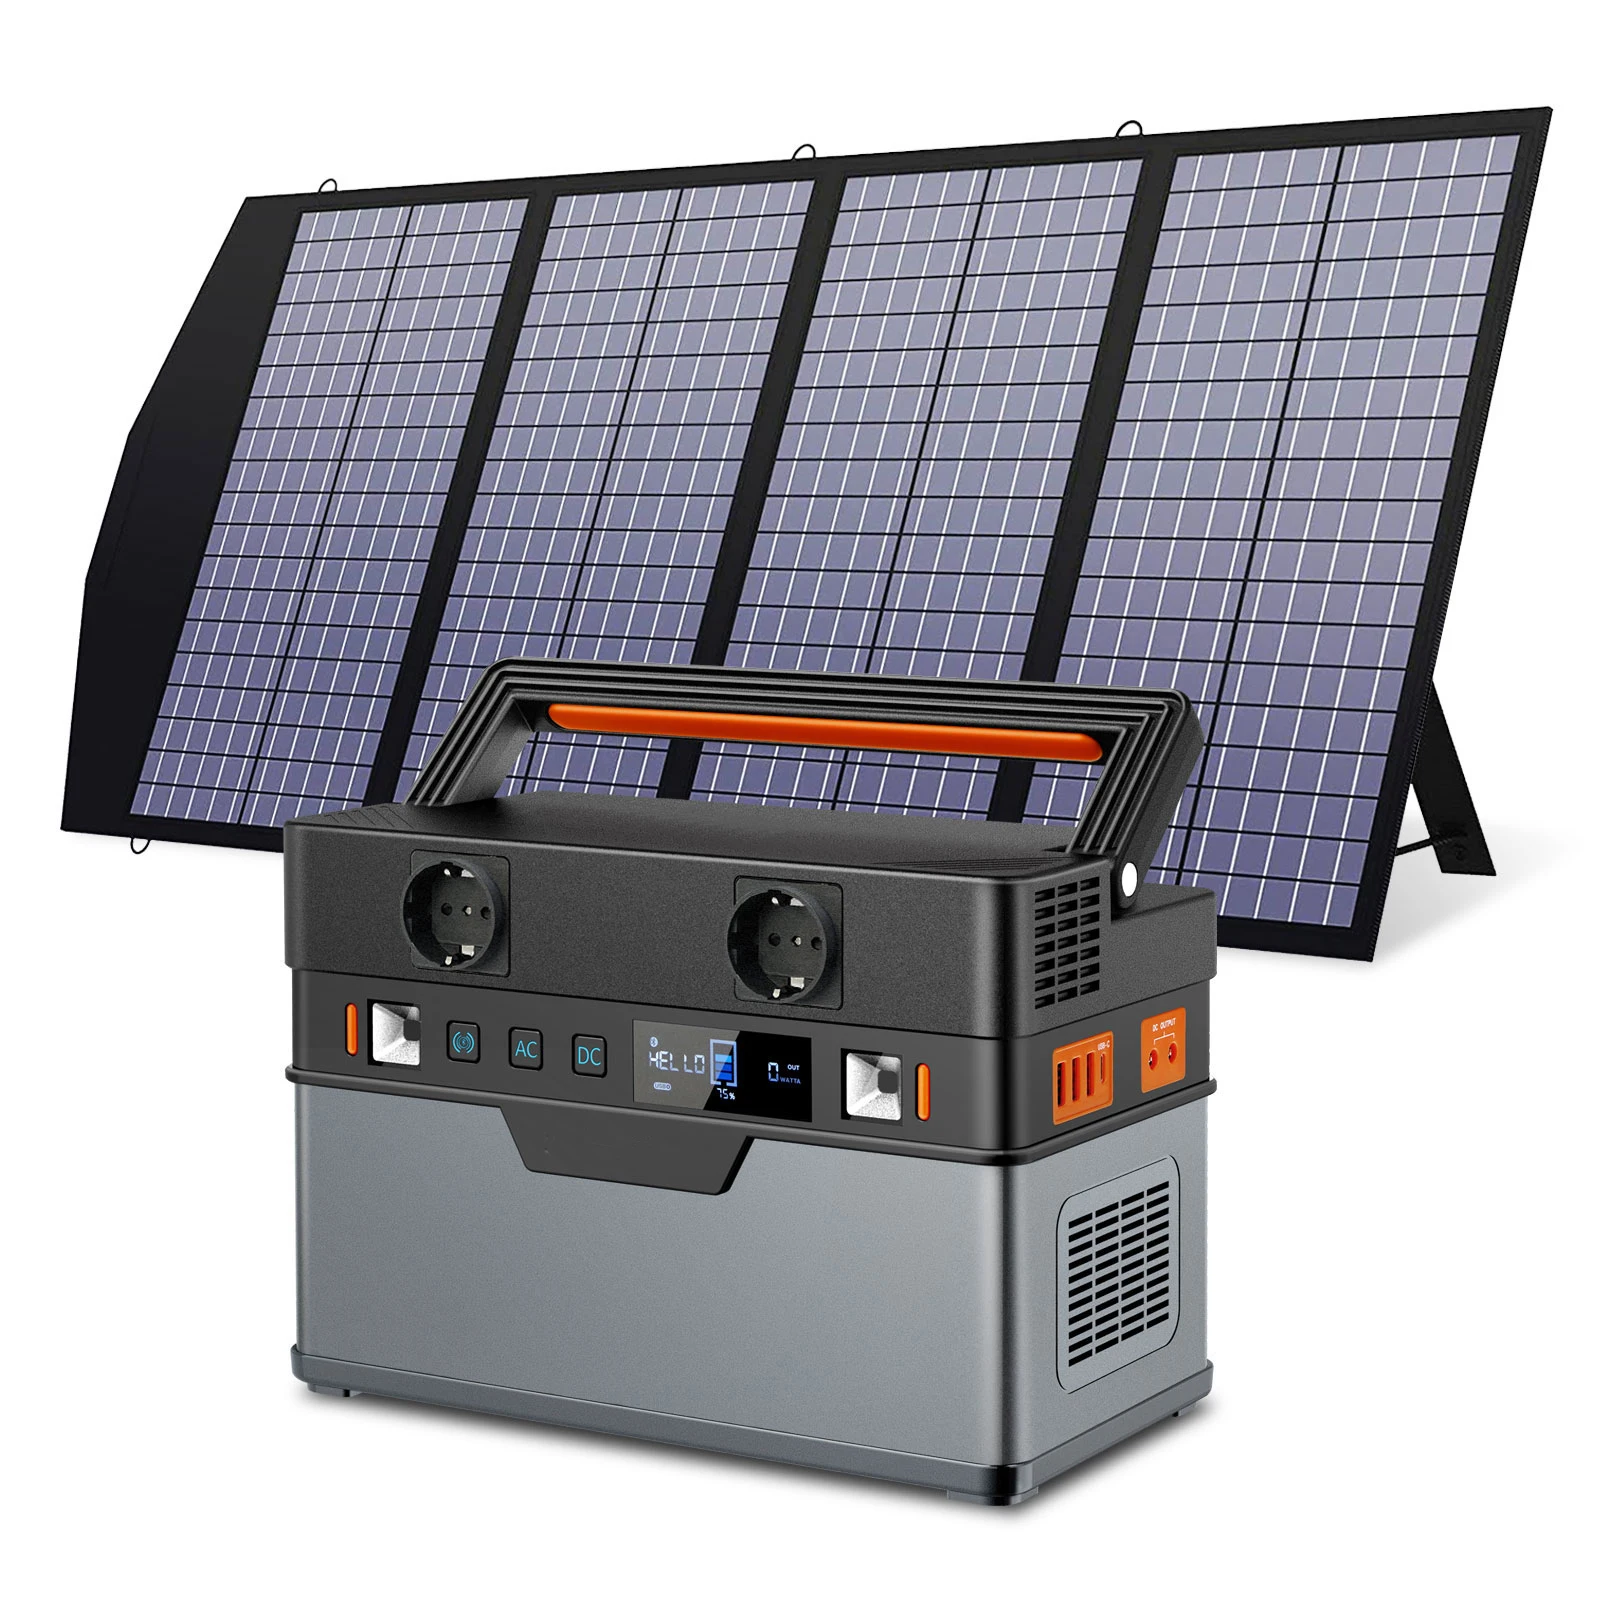 

Solar Generator, 110V/220V Portable Power Station,Mobile Emergency Backup Power With 18V Foldable Solar Panel Charger